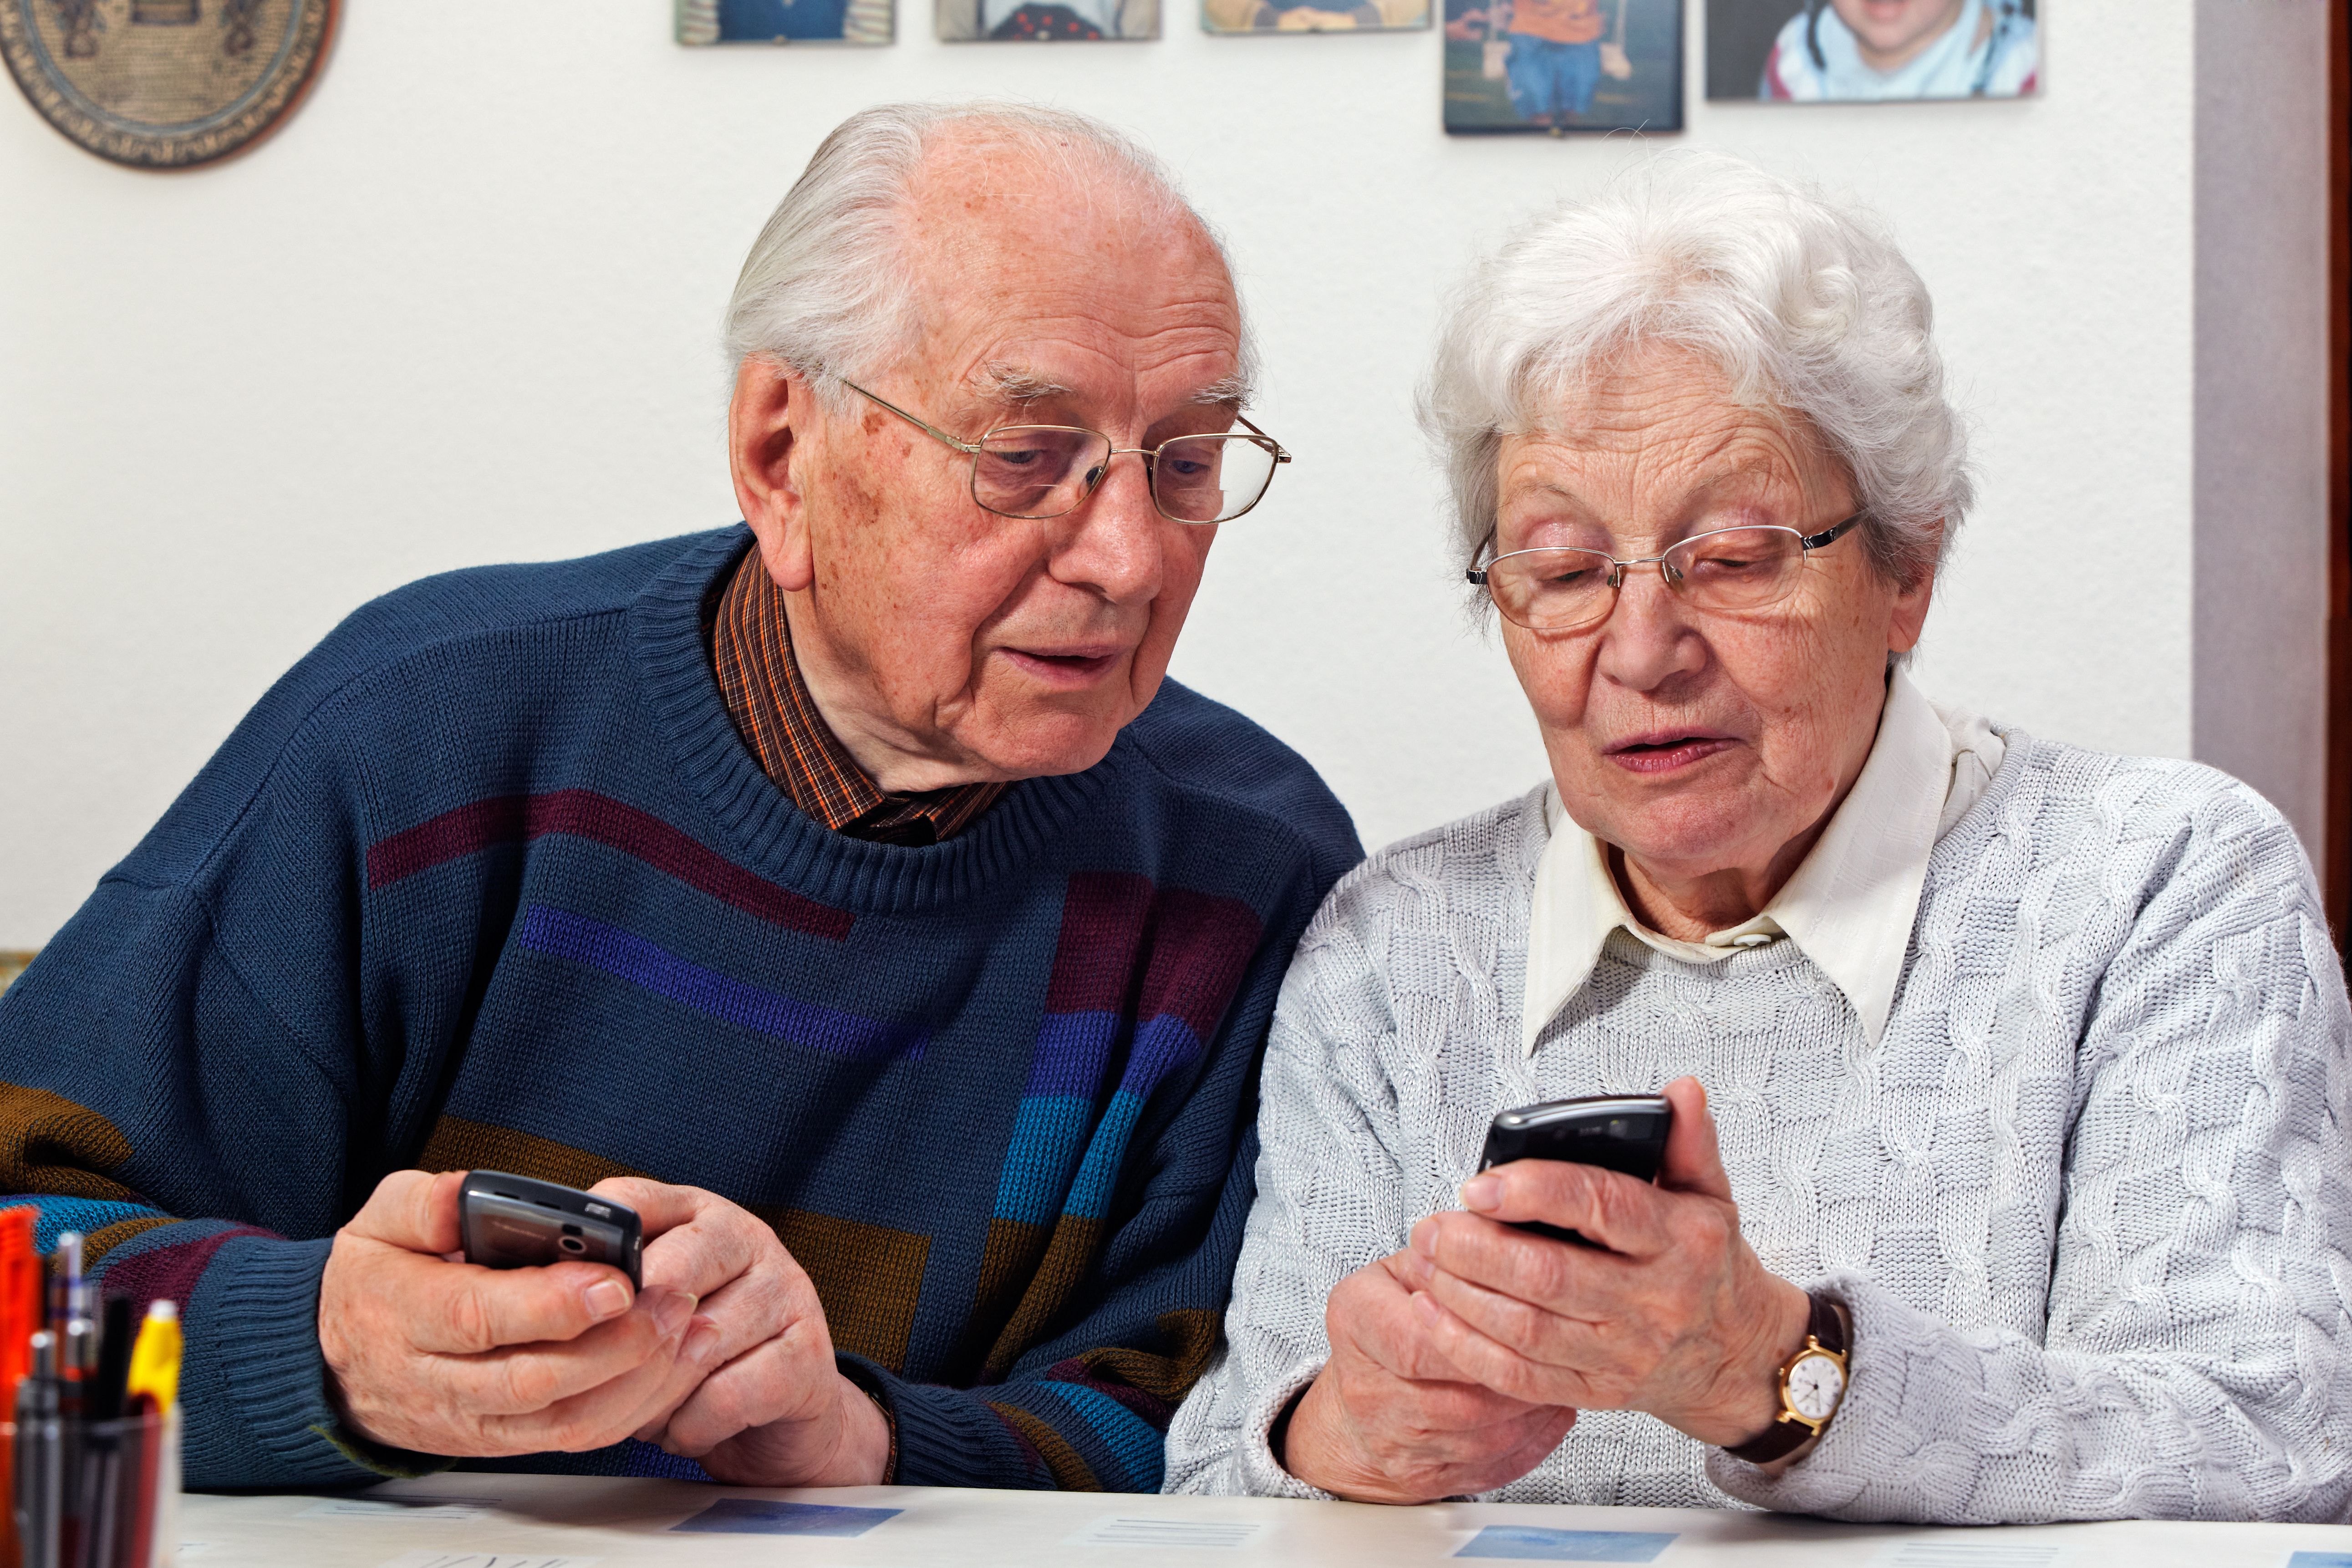 Elderly People with Smartphone